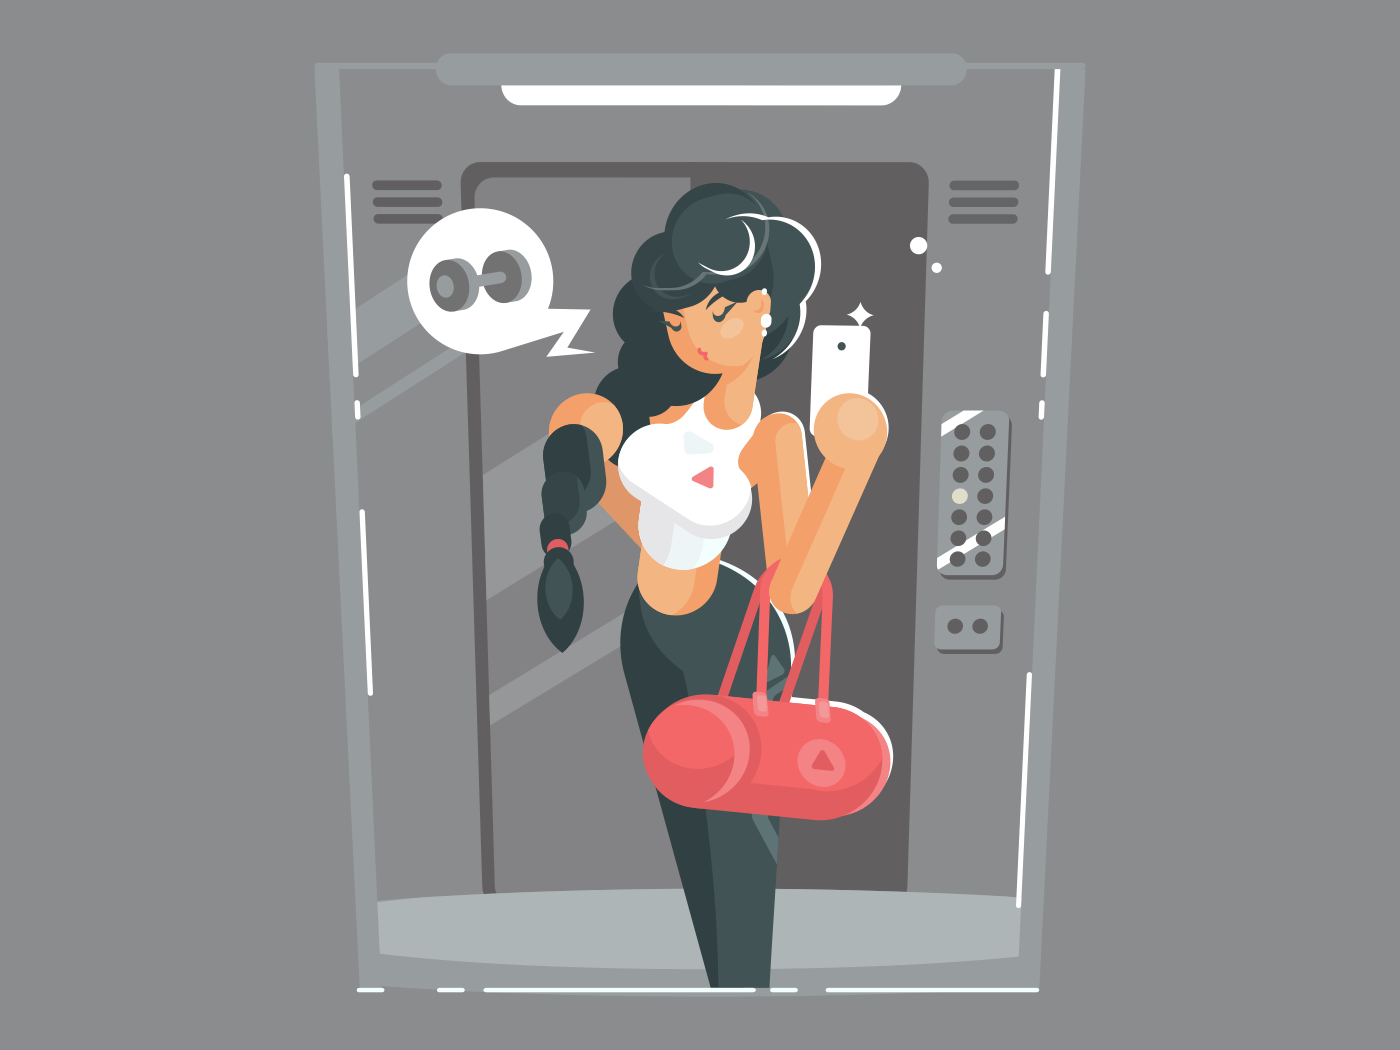 Young girl selfie in elevator illustration